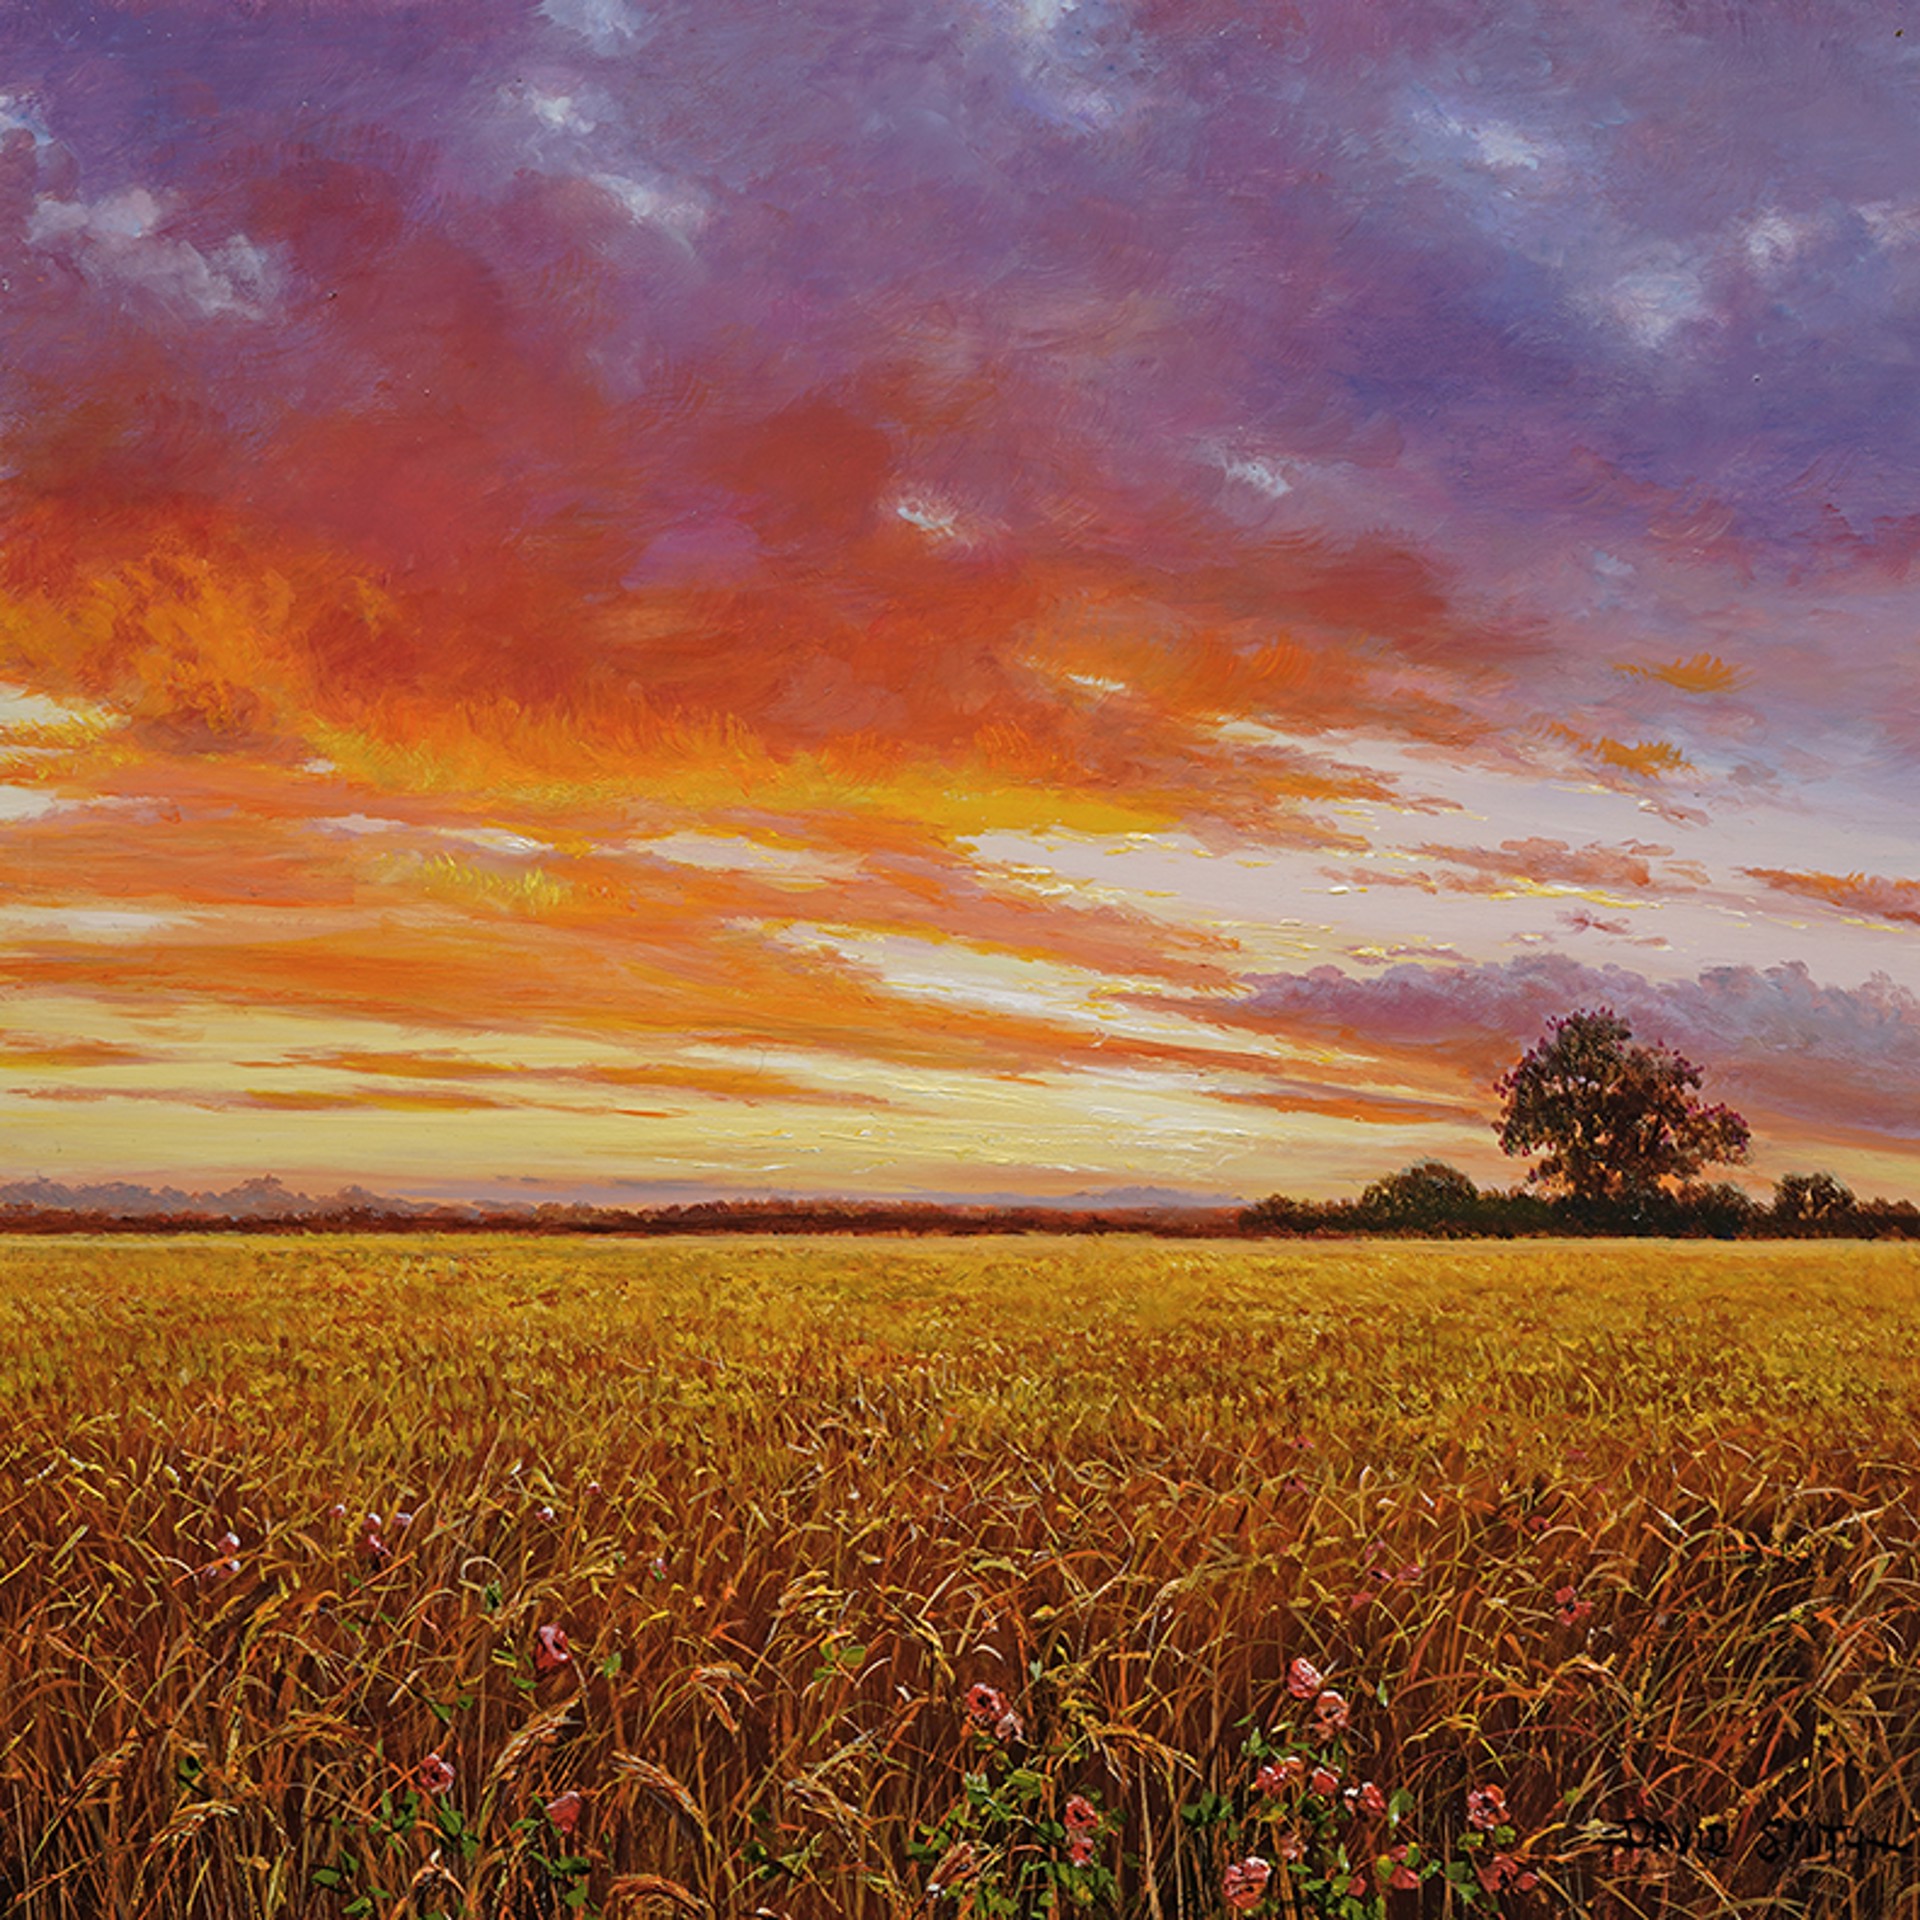 Barley Field at Sunset by David Smith